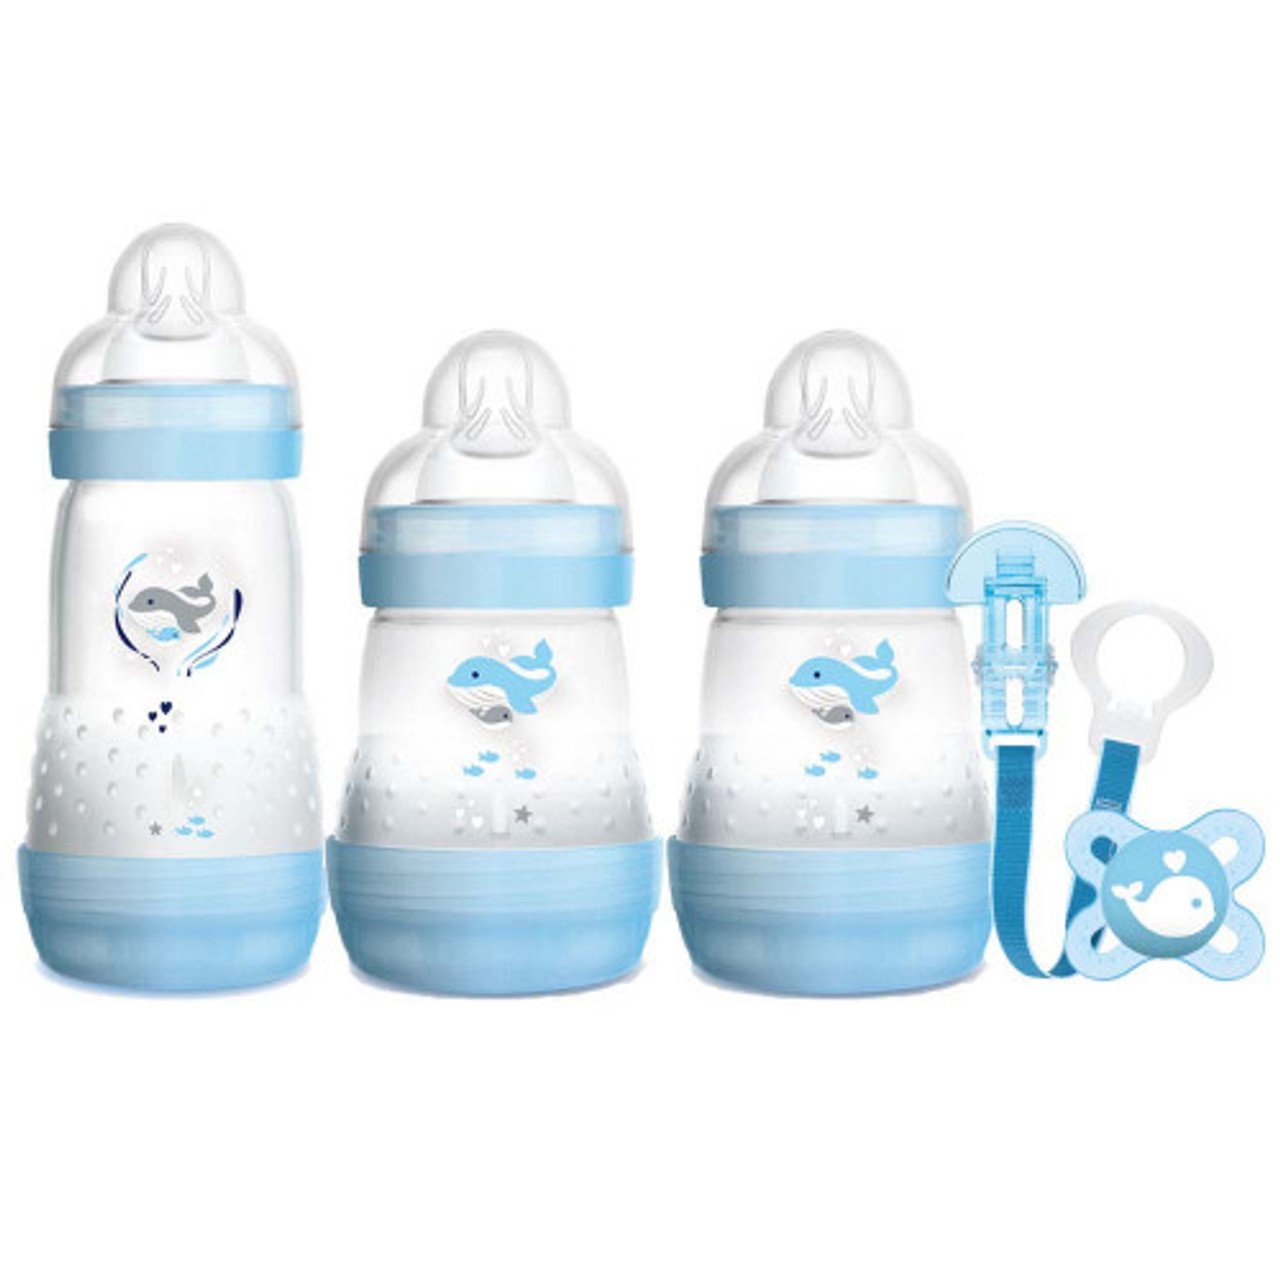 Mam Welcome to the World Gift Set for Newborns 0m+ Σετ με 3 Μπιμπερό με Θηλή Σιλικόνης Κατά των Κολικών & Πιπίλα Σιλικόνης & Κορδέλα Στήριξης Μπλε Φάλαινα Κωδ 660 1 Τεμάχια 53701